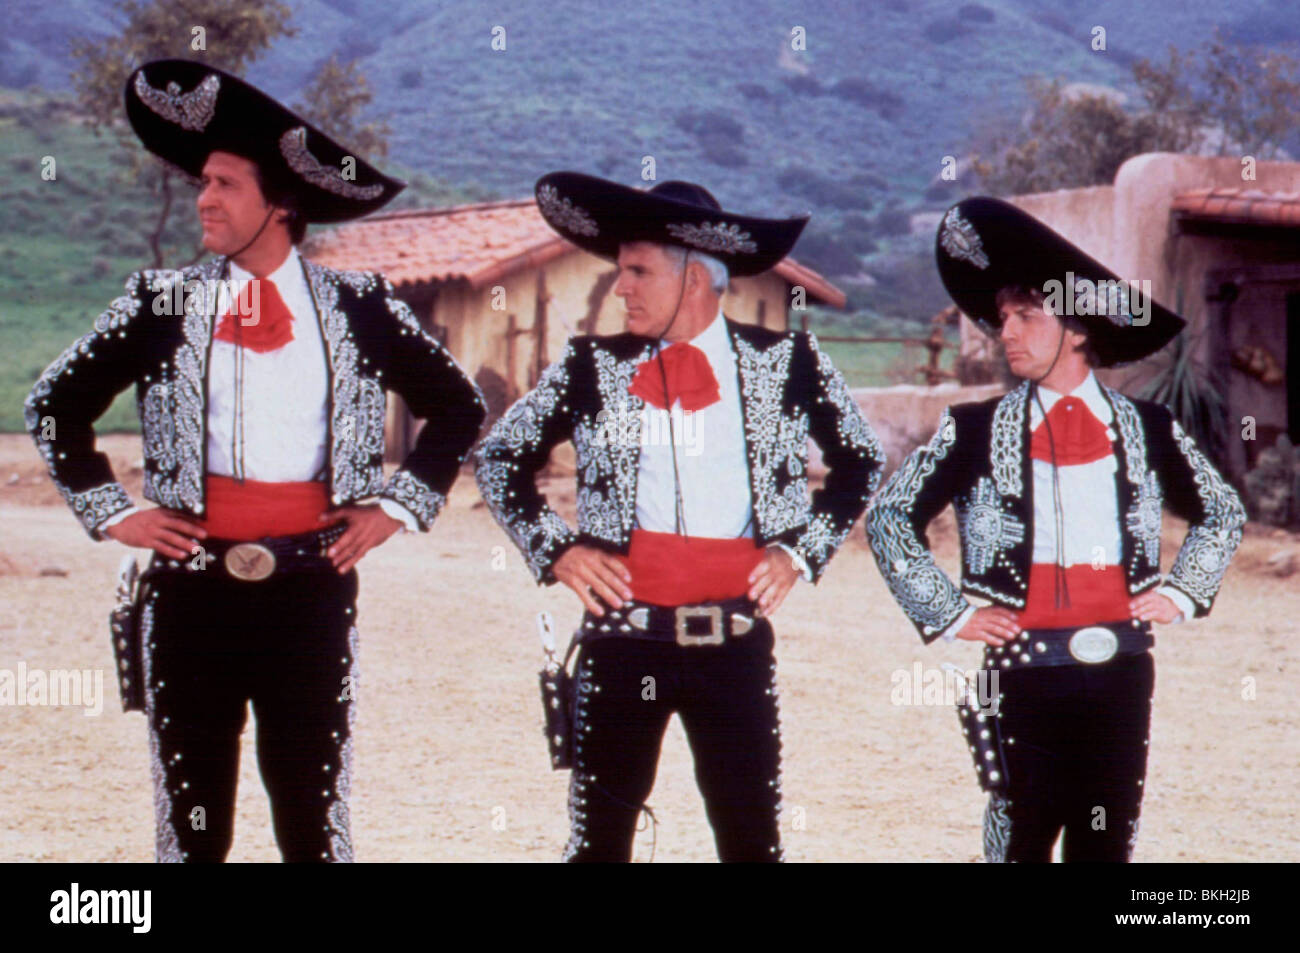 THREE AMIGOS (1986) 3 AMIGOS (ALT) CHEVY CHASE, STEVE MARTIN, MARTIN SHORT  TTAM 004 Stock Photo - Alamy